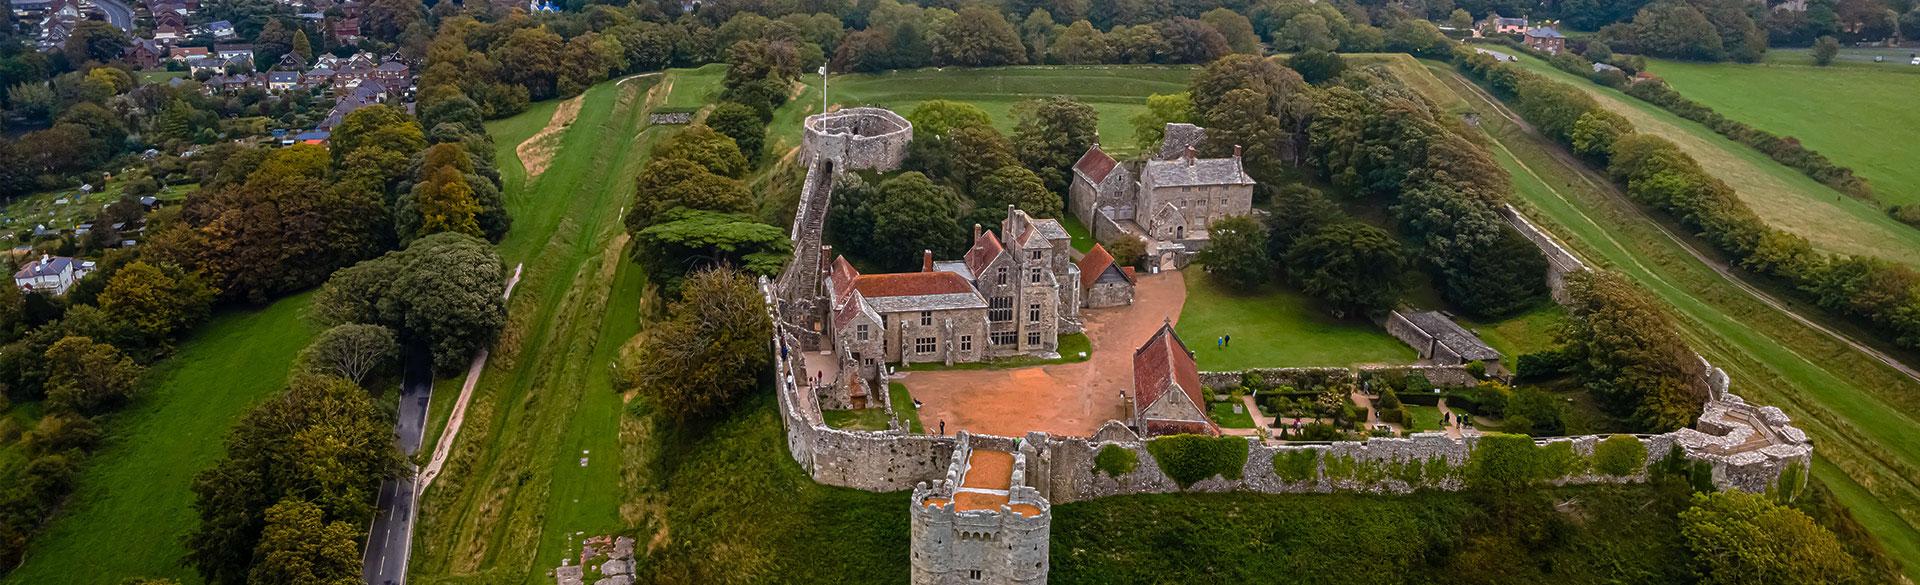 Banner image for Top 10 English Heritage Castles banner image